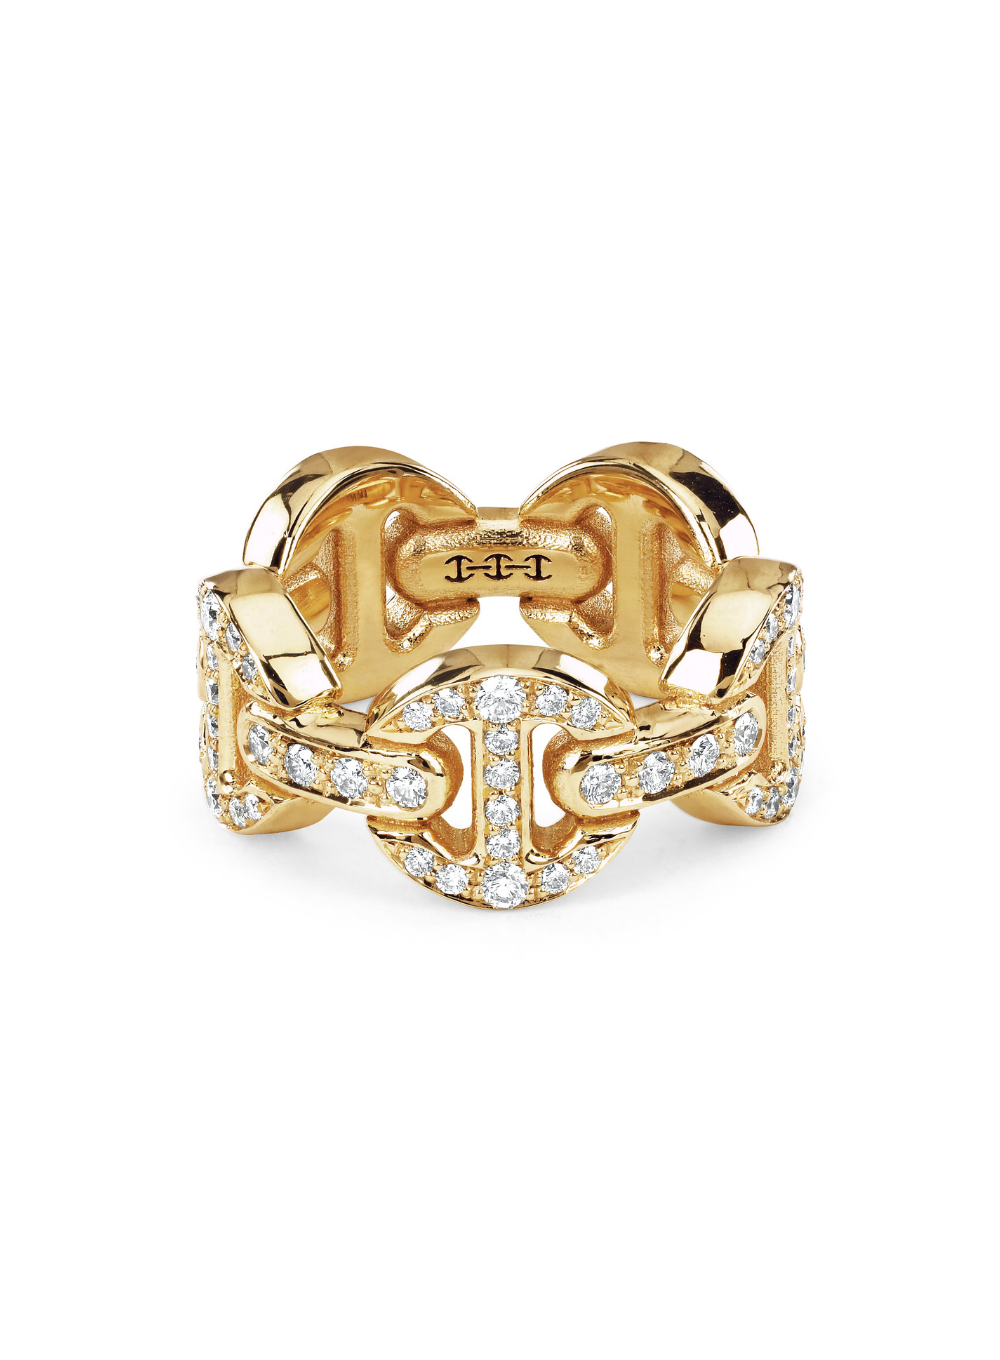 HOORSENBUHS | Dame Classic Tri-Link Antiquated Ring – Joan Shepp